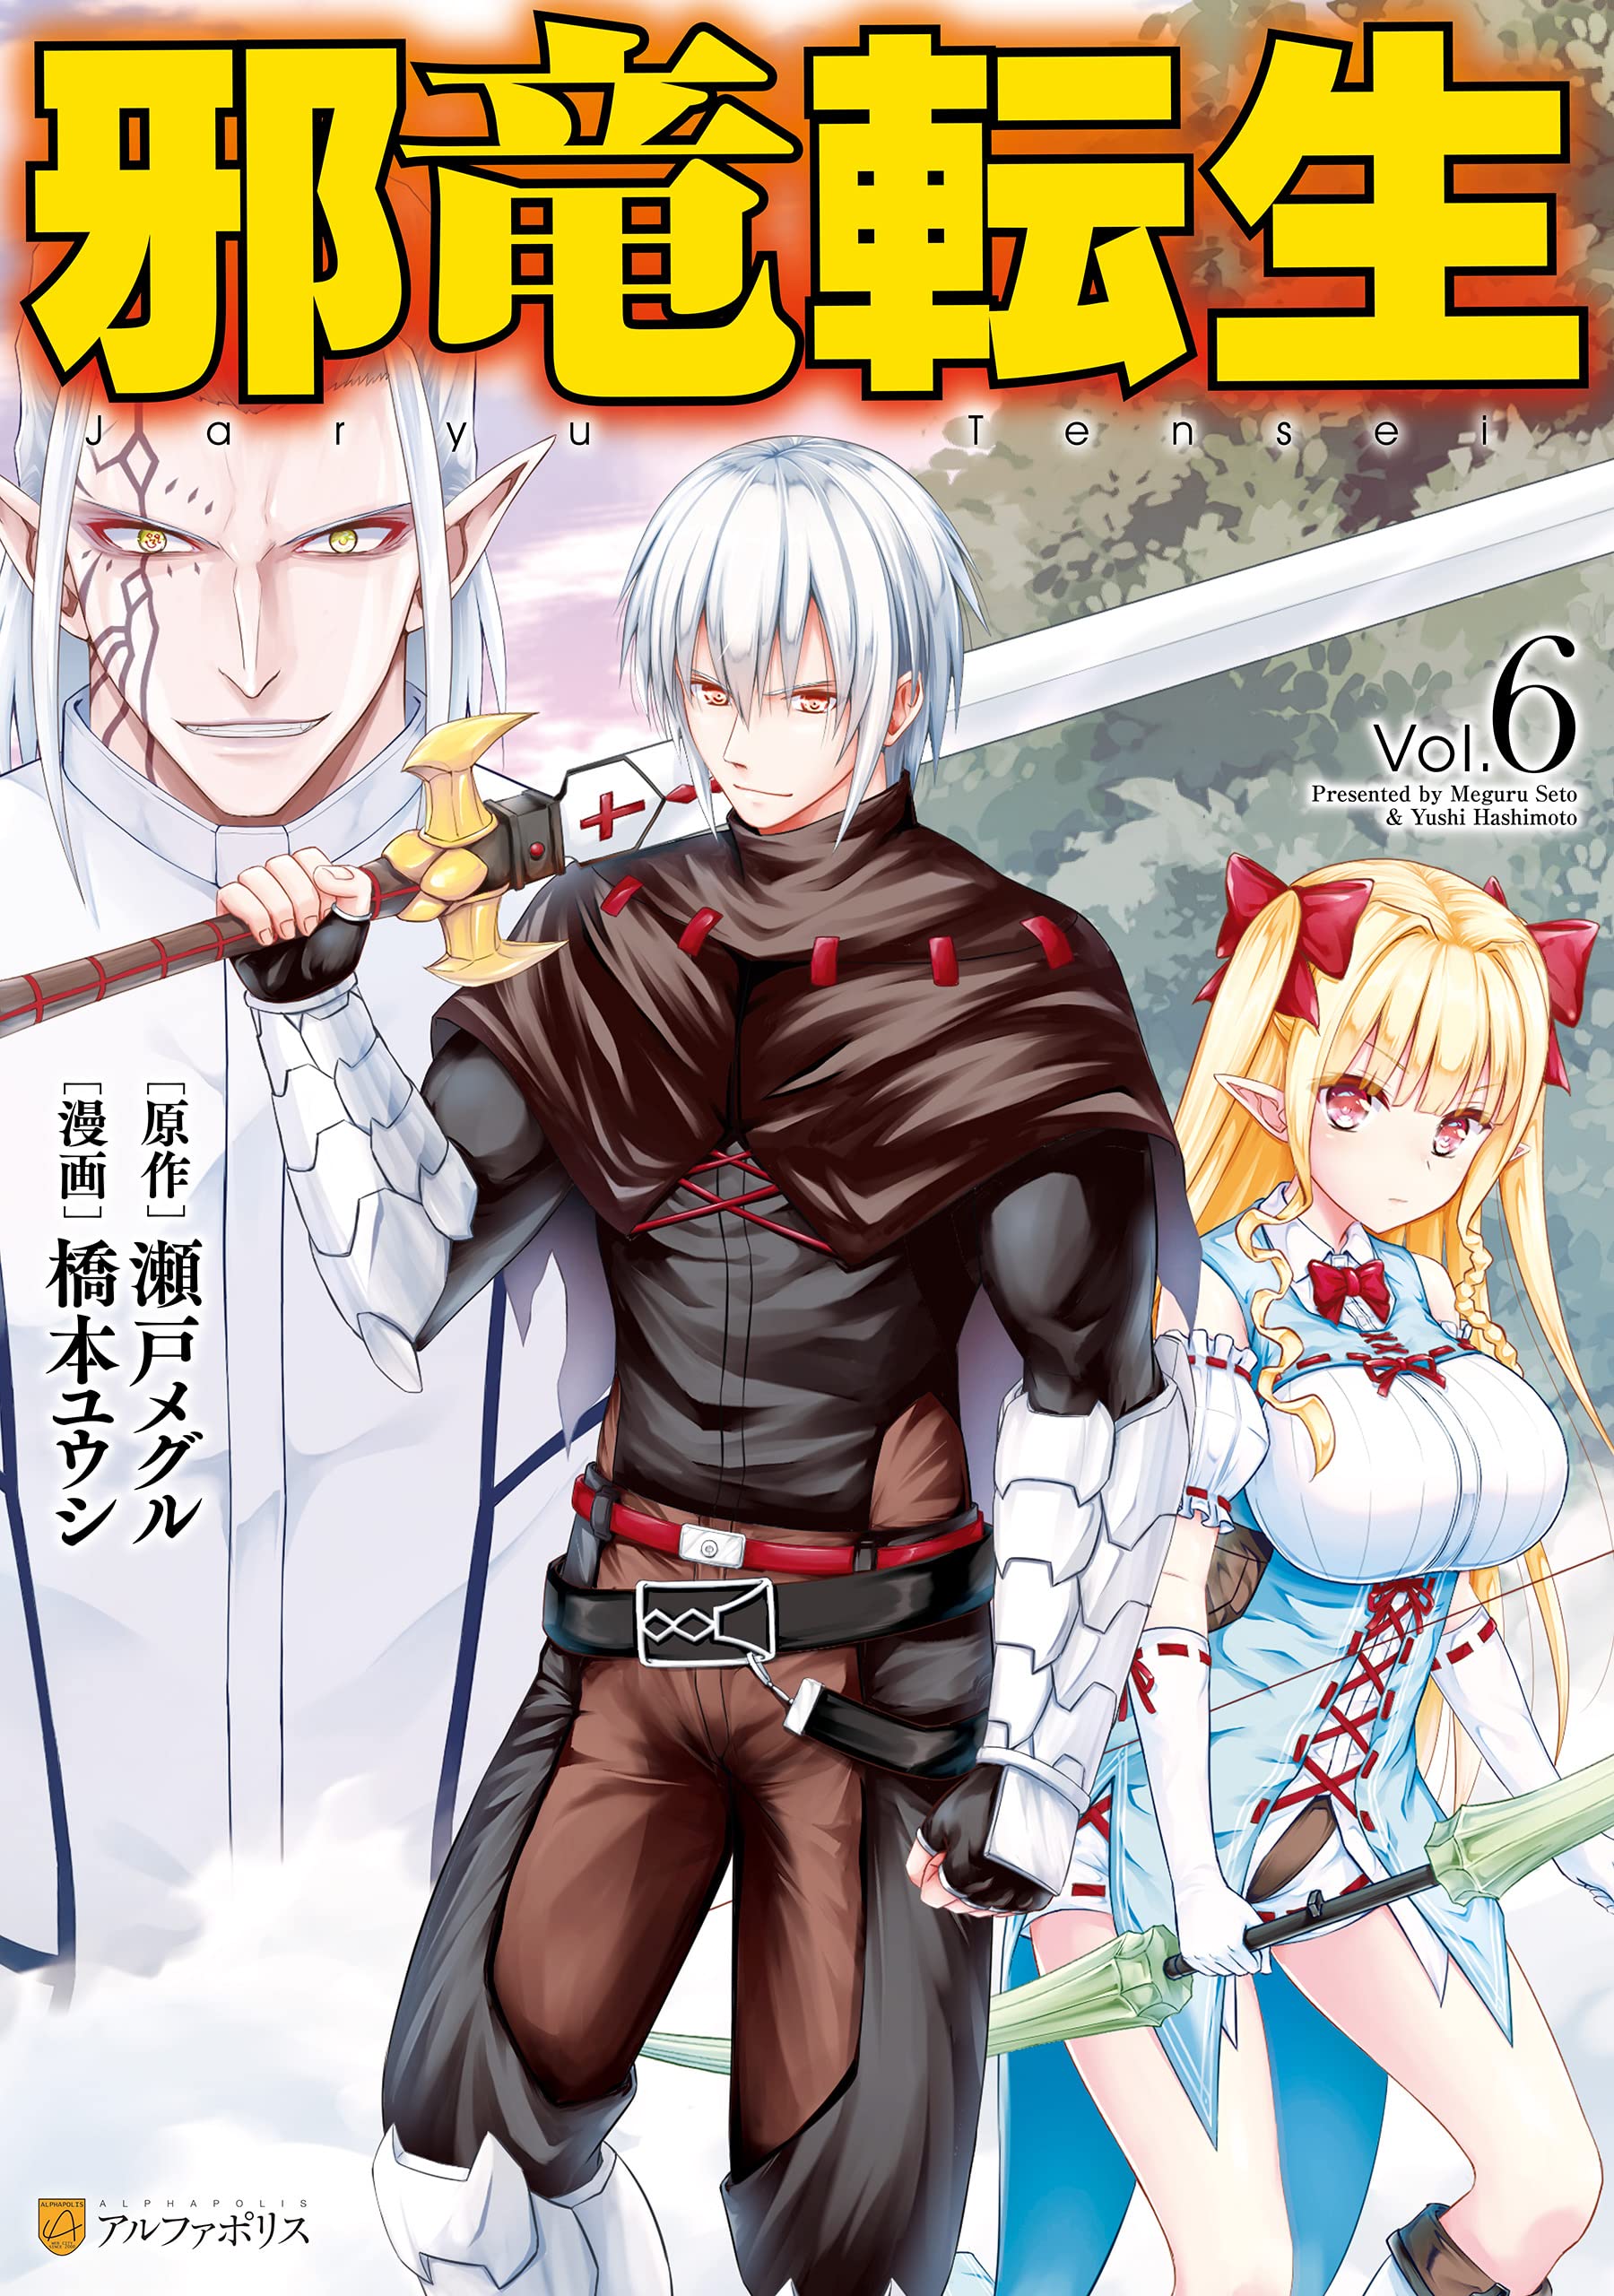 Manga Mogura RE on X: The Reincarnation of the Strongest